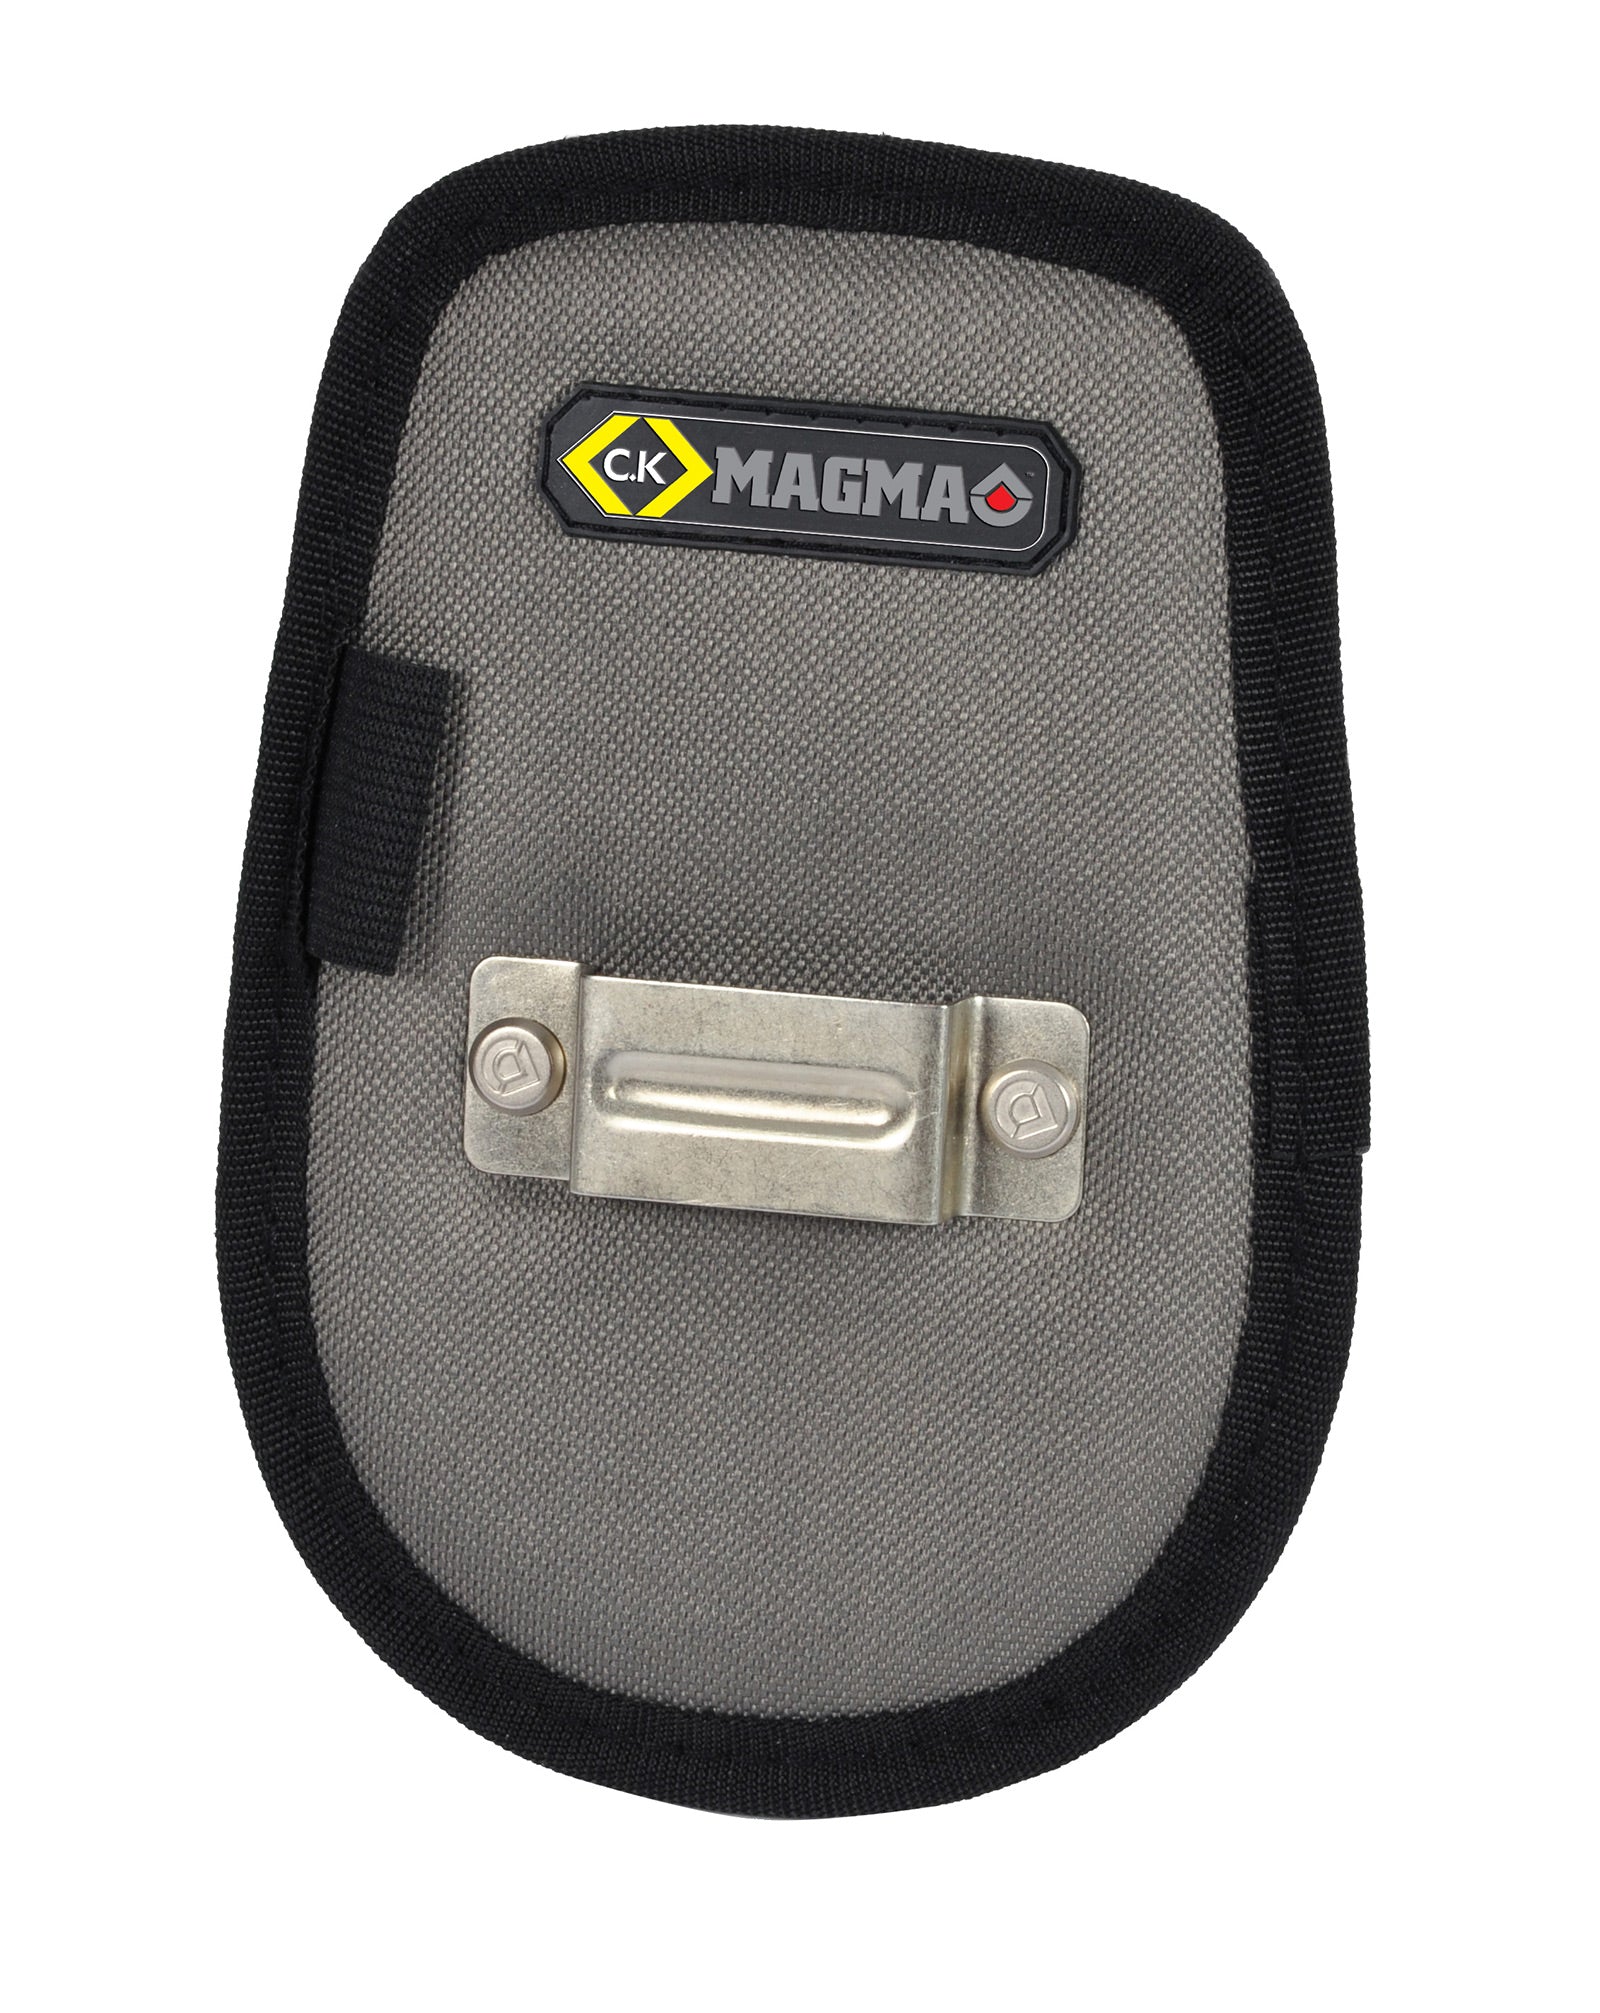 C.K Magma MA2732 tape measure holder